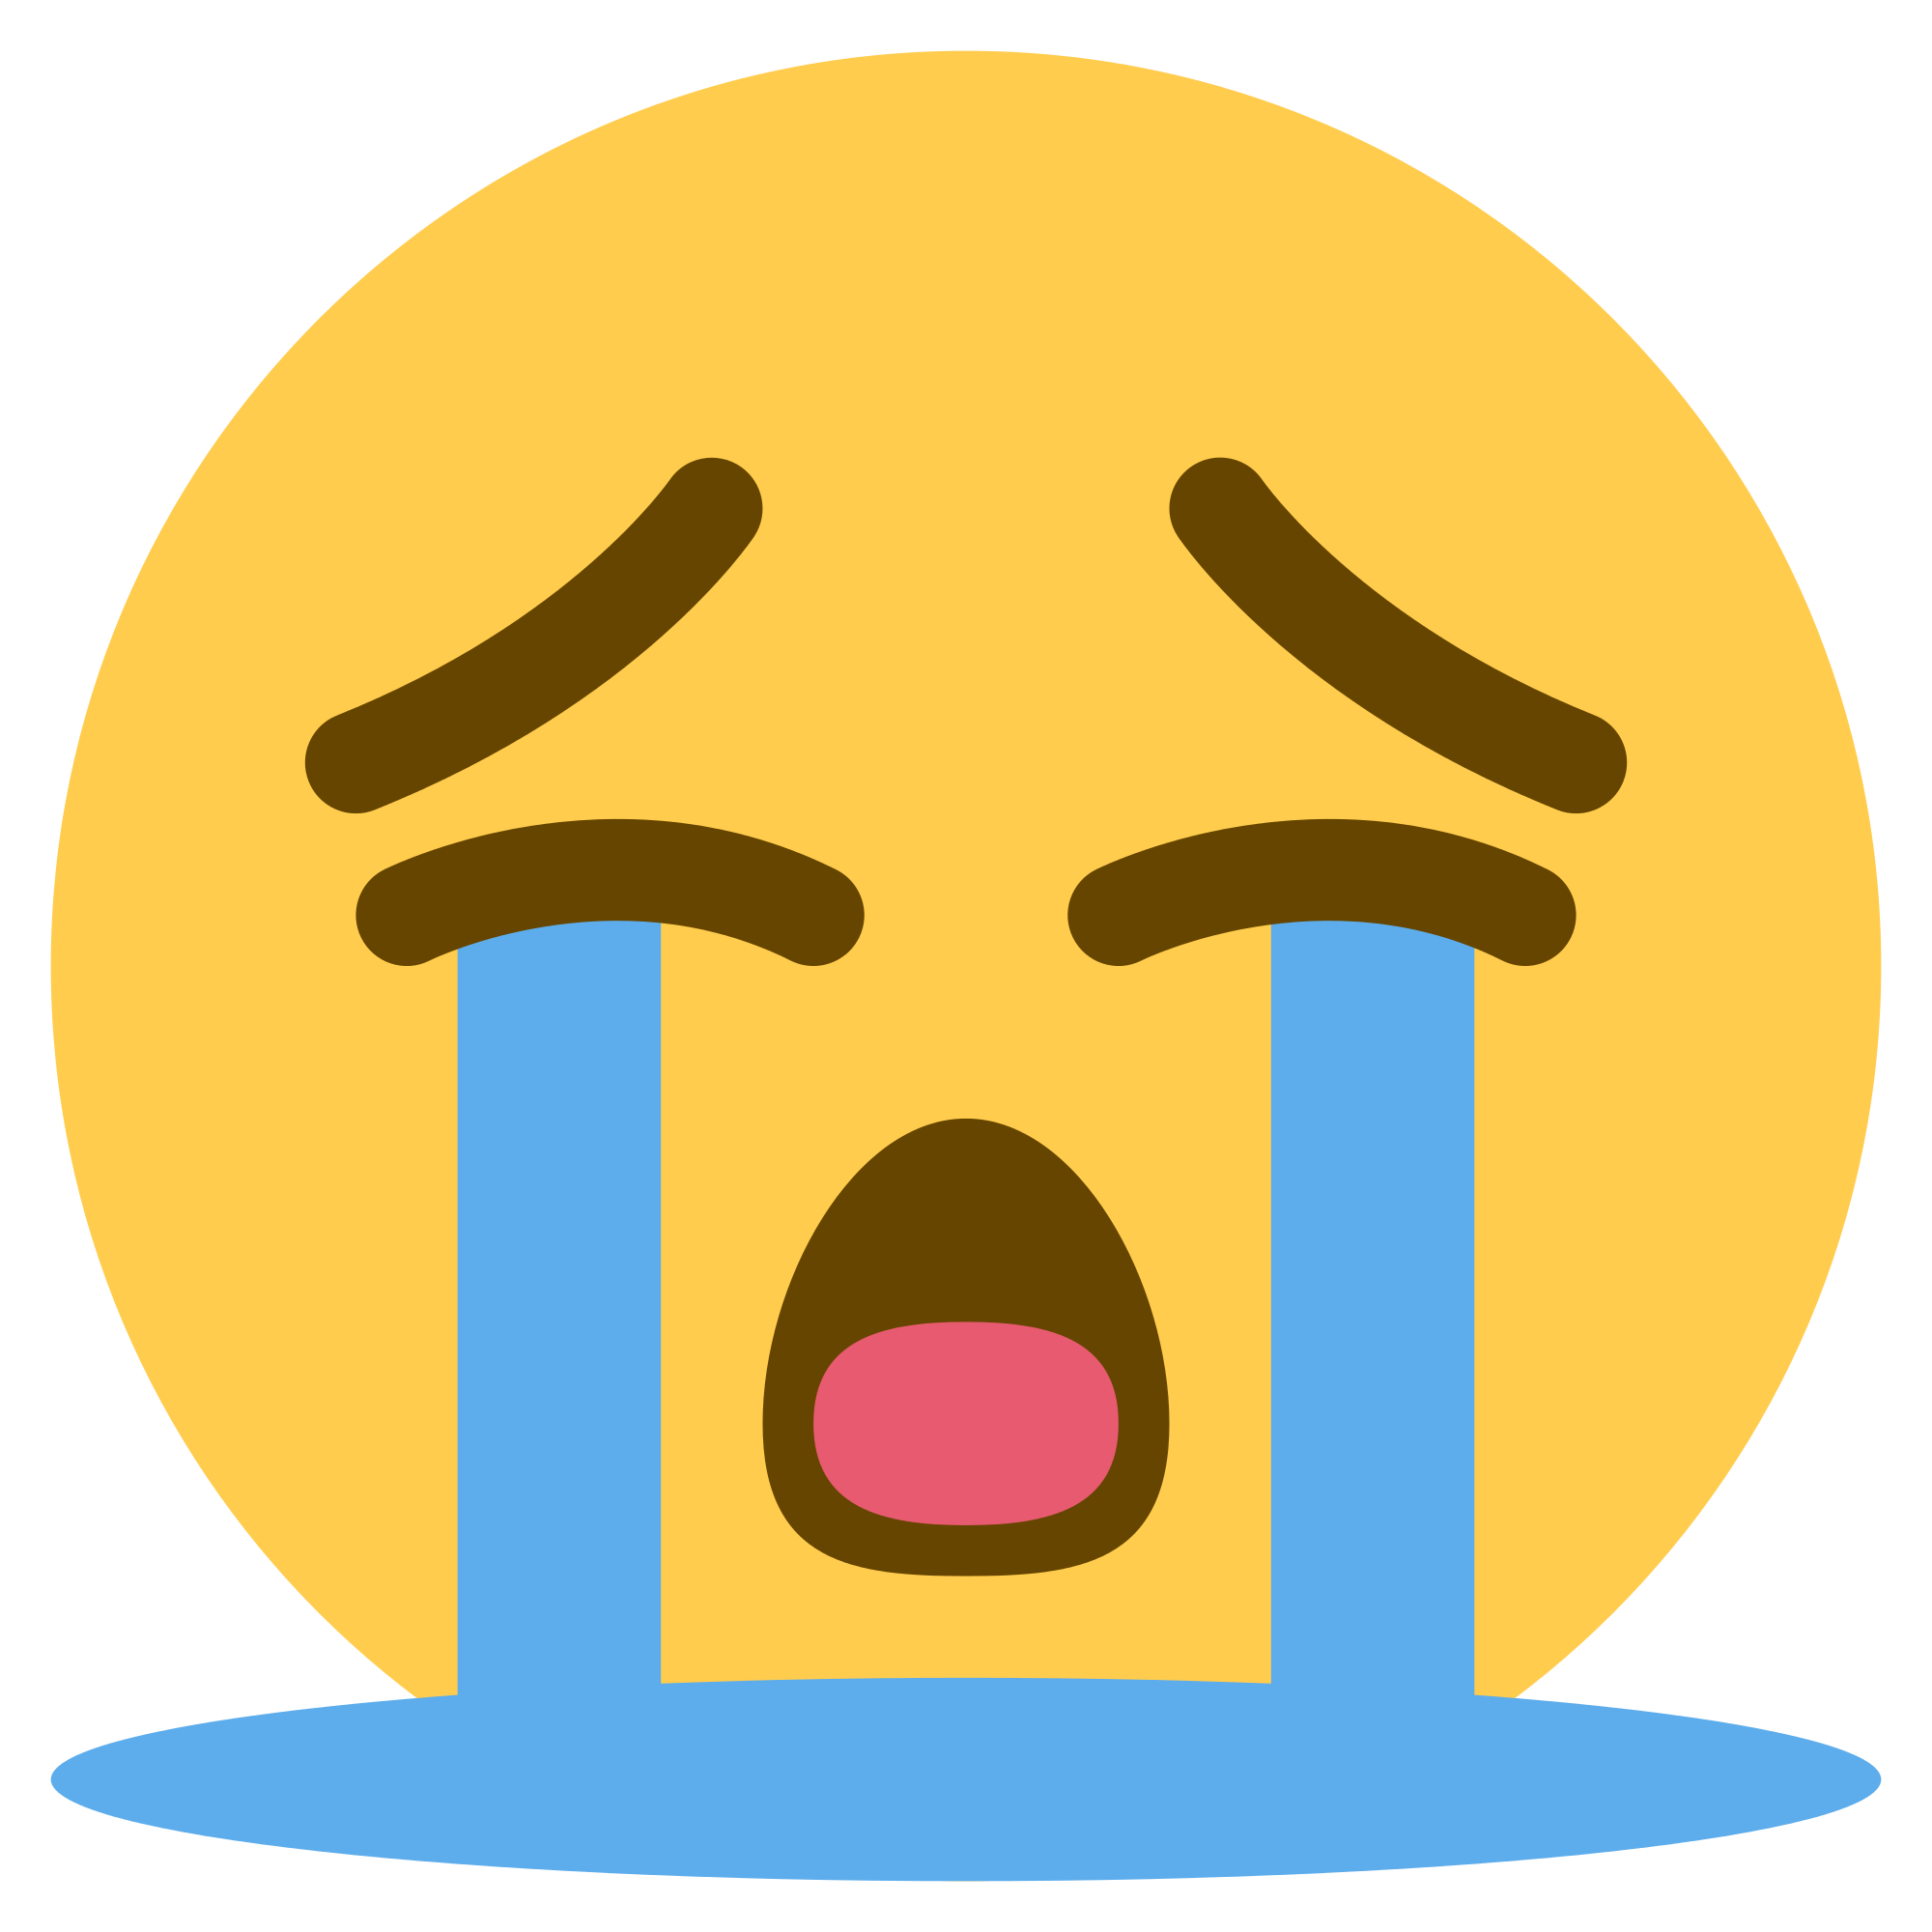 Image result for crying emoji